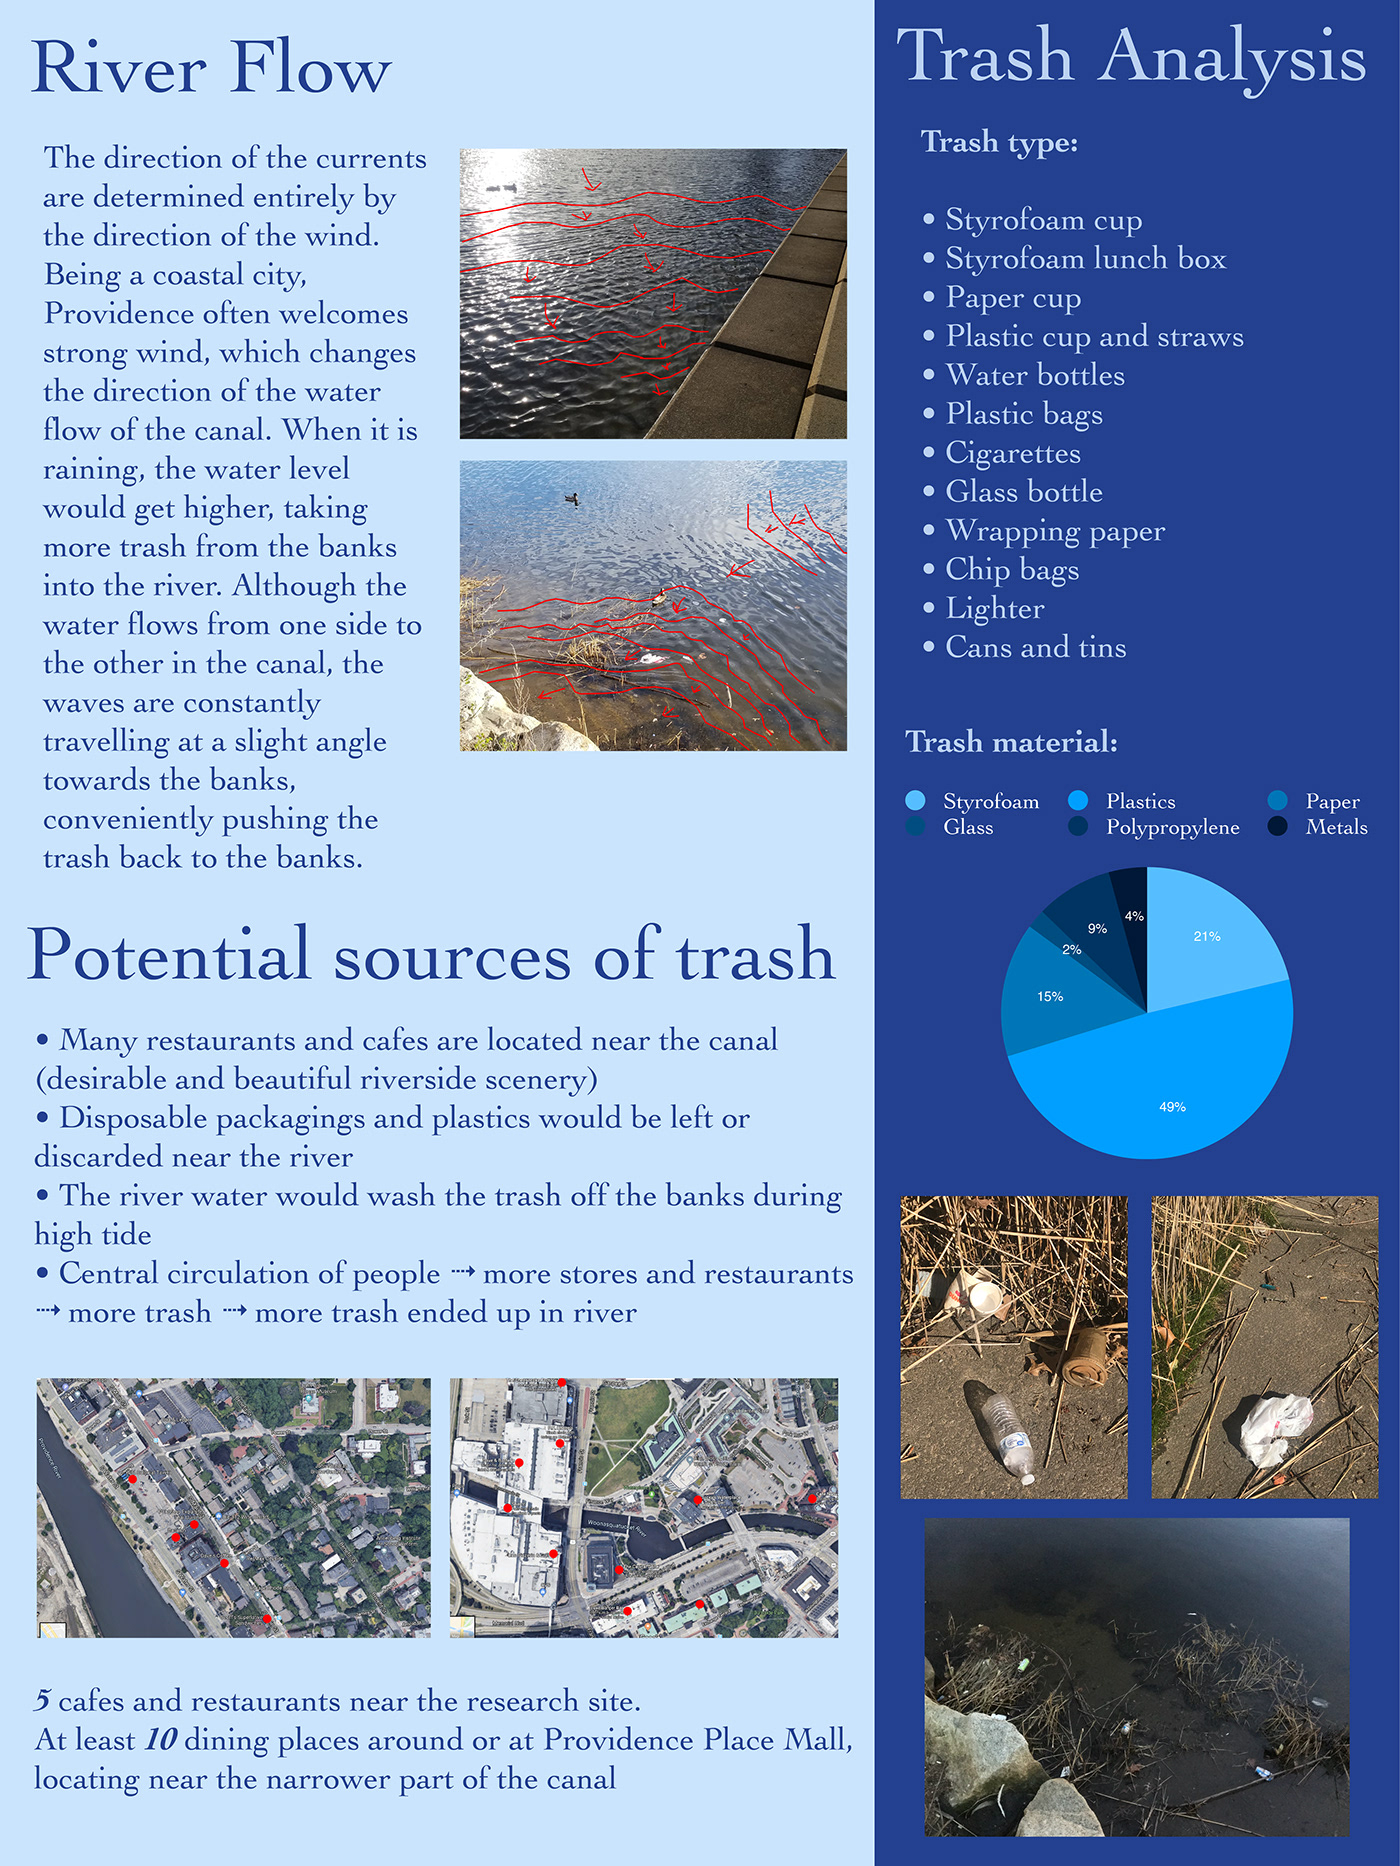 water trash Trash collector green design river trash device research mechanism trash rendering trash collection